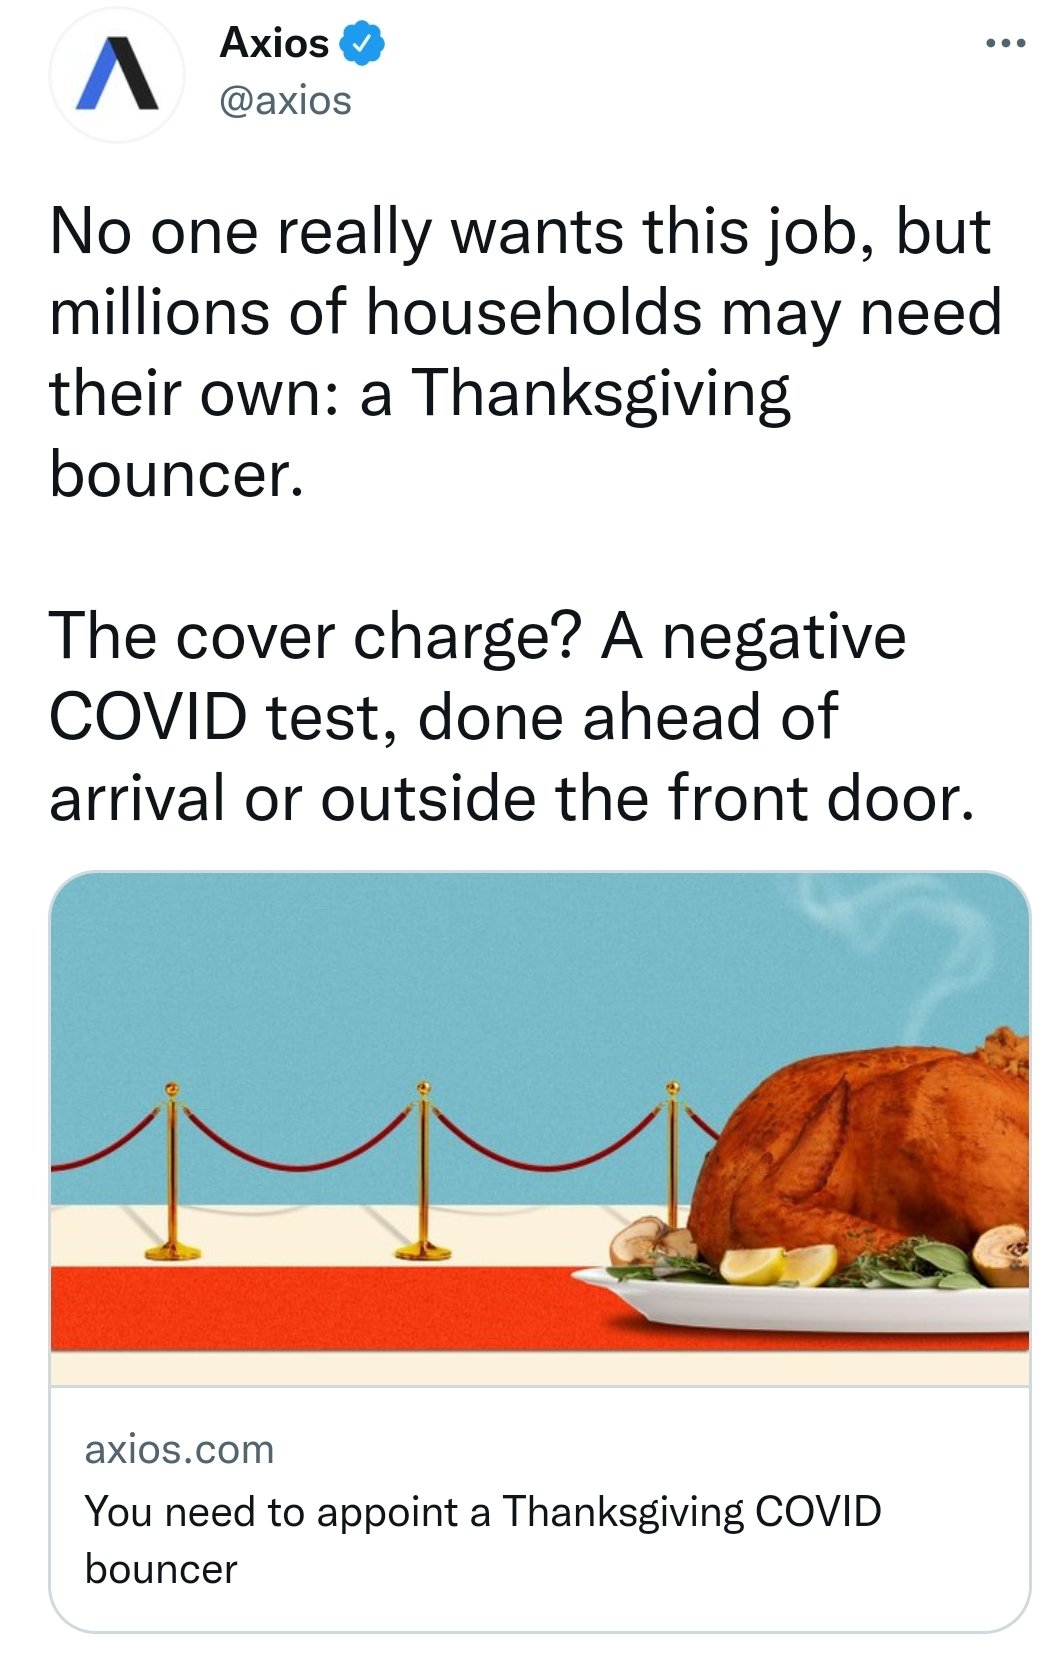 thanksgivingbouncer.jfif